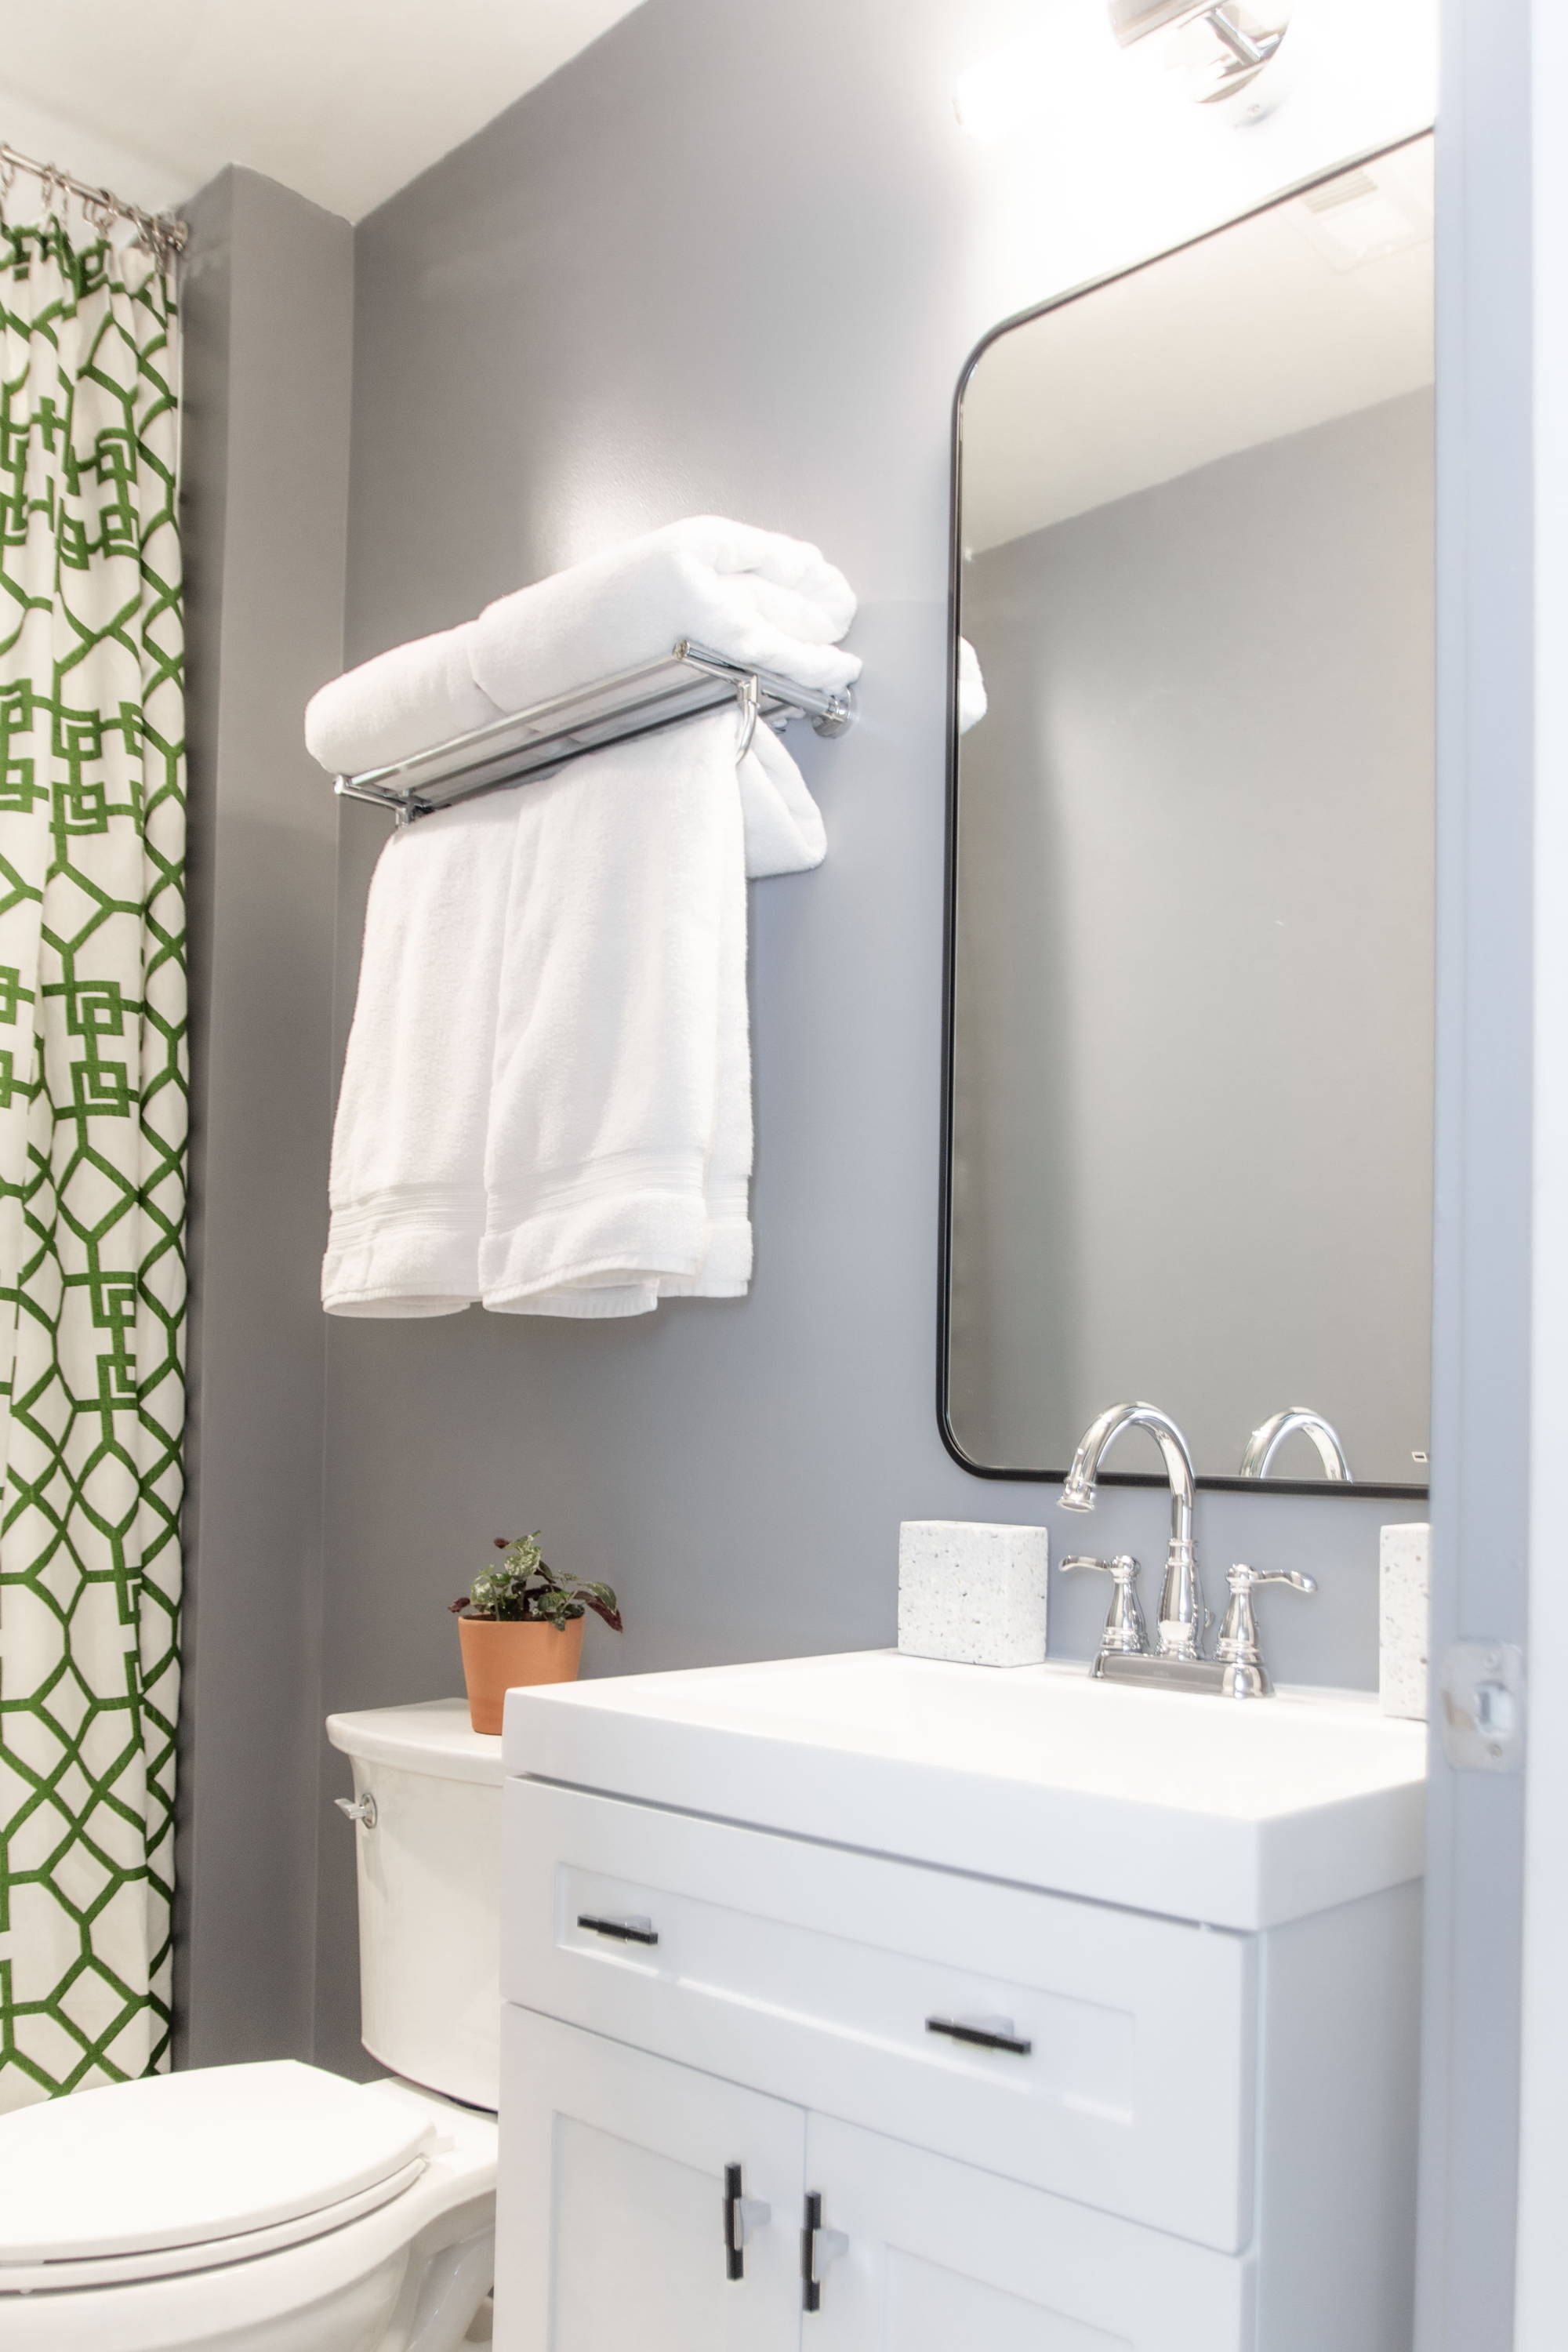 Bathroom renovation reveal, small shower to bathtub conversion, grey bathroom design, slate tile shower, Atlanta interior designer Kevin Francis Design #bathroom #smallbathroom #bathroomdesign #bathroomrenovation